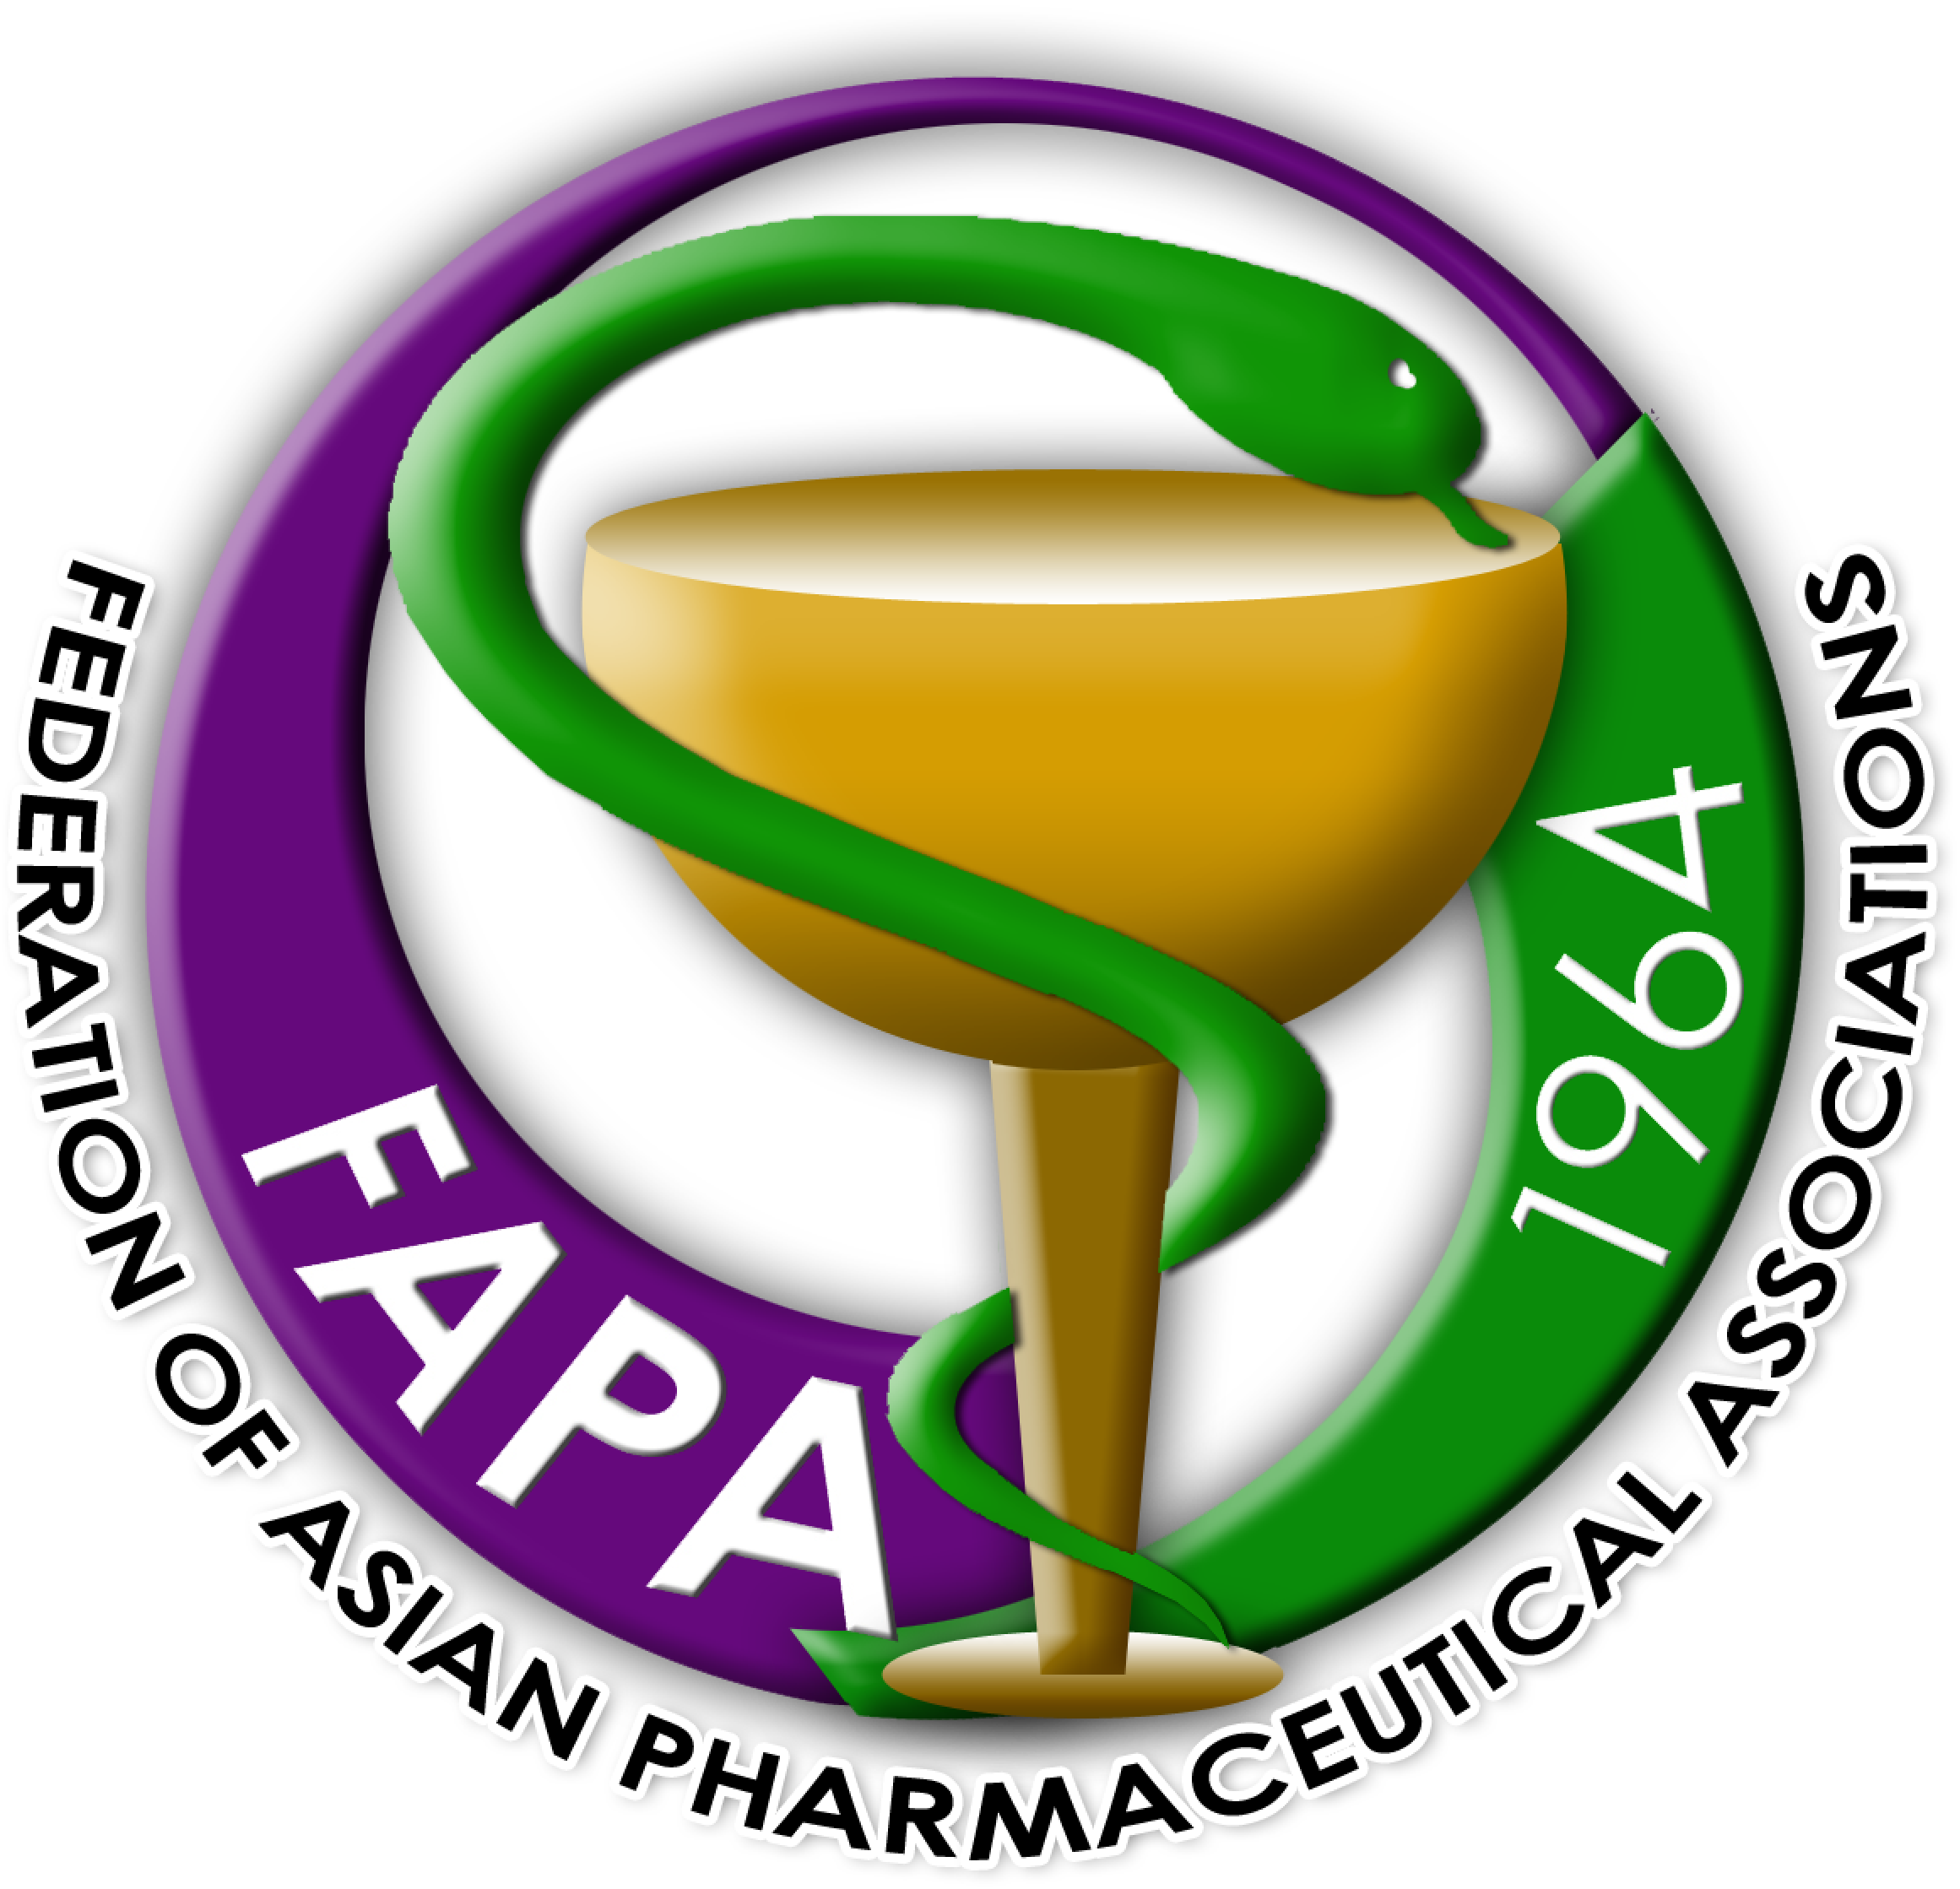 Handing FTPA Certificate of Membership